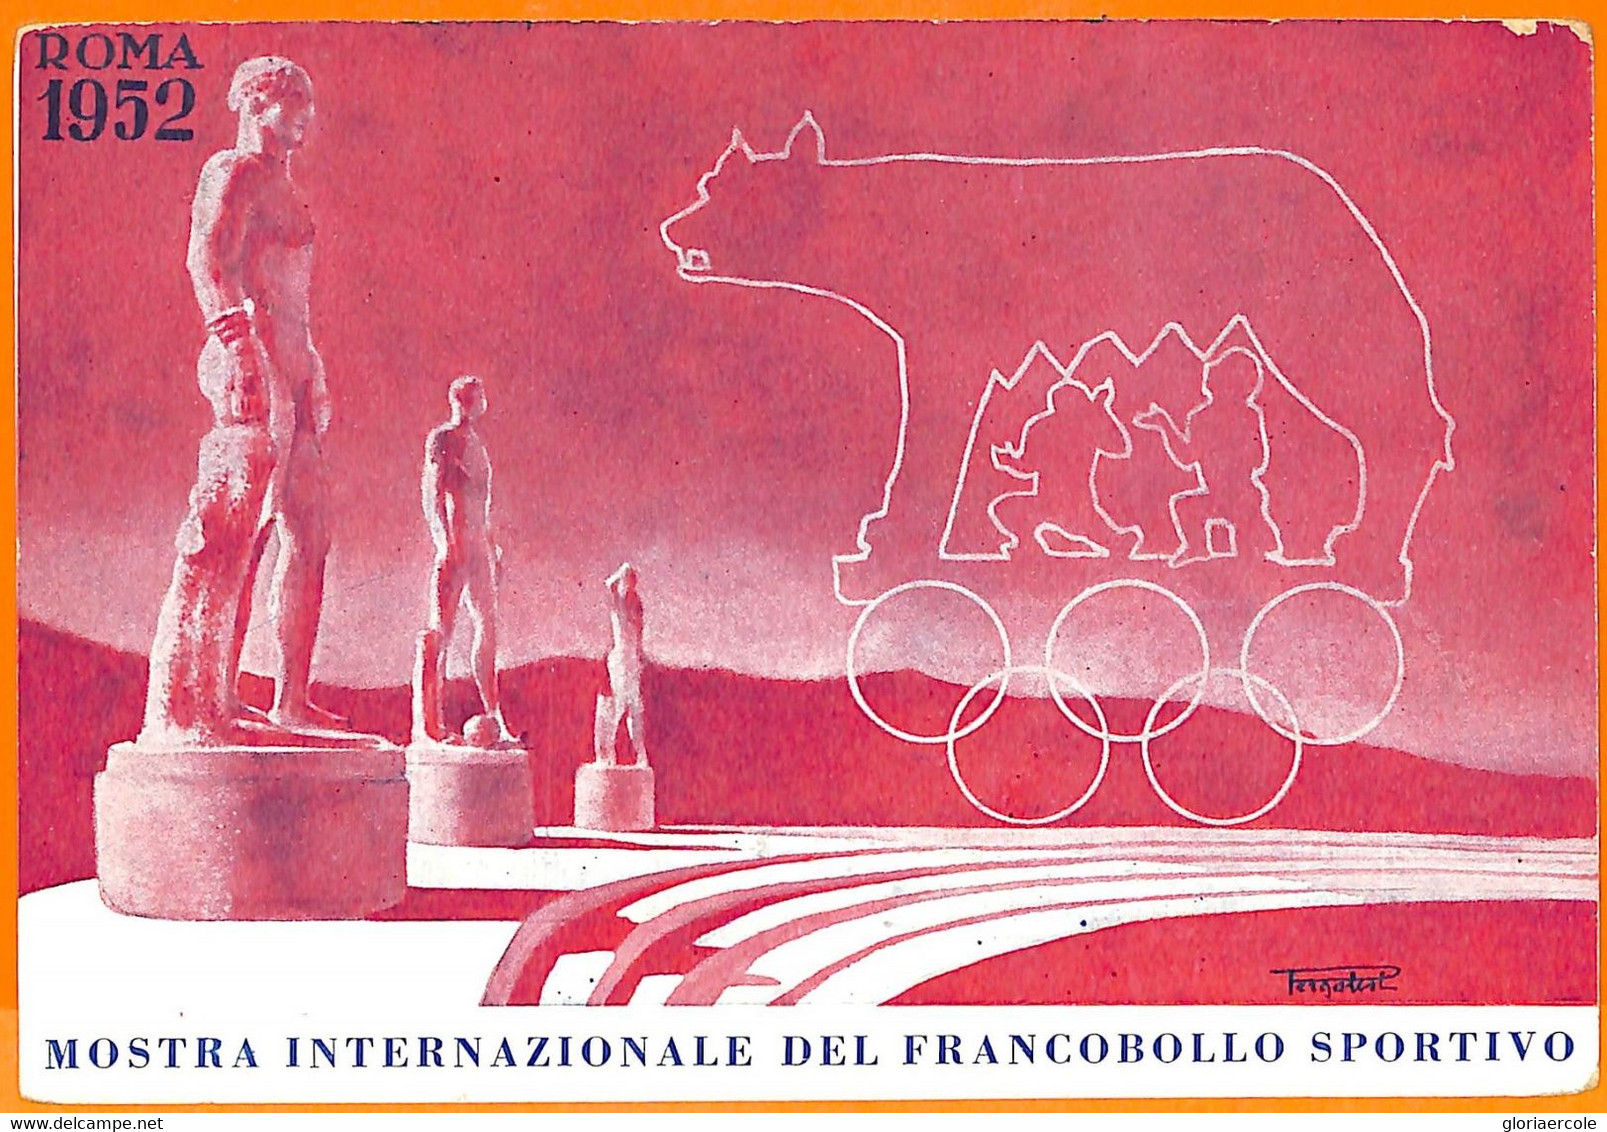 Aa2847 - Postal History - VINTAGE Illustrated CARD - 1952  Olympic Games ITALY - Ete 1952: Helsinki